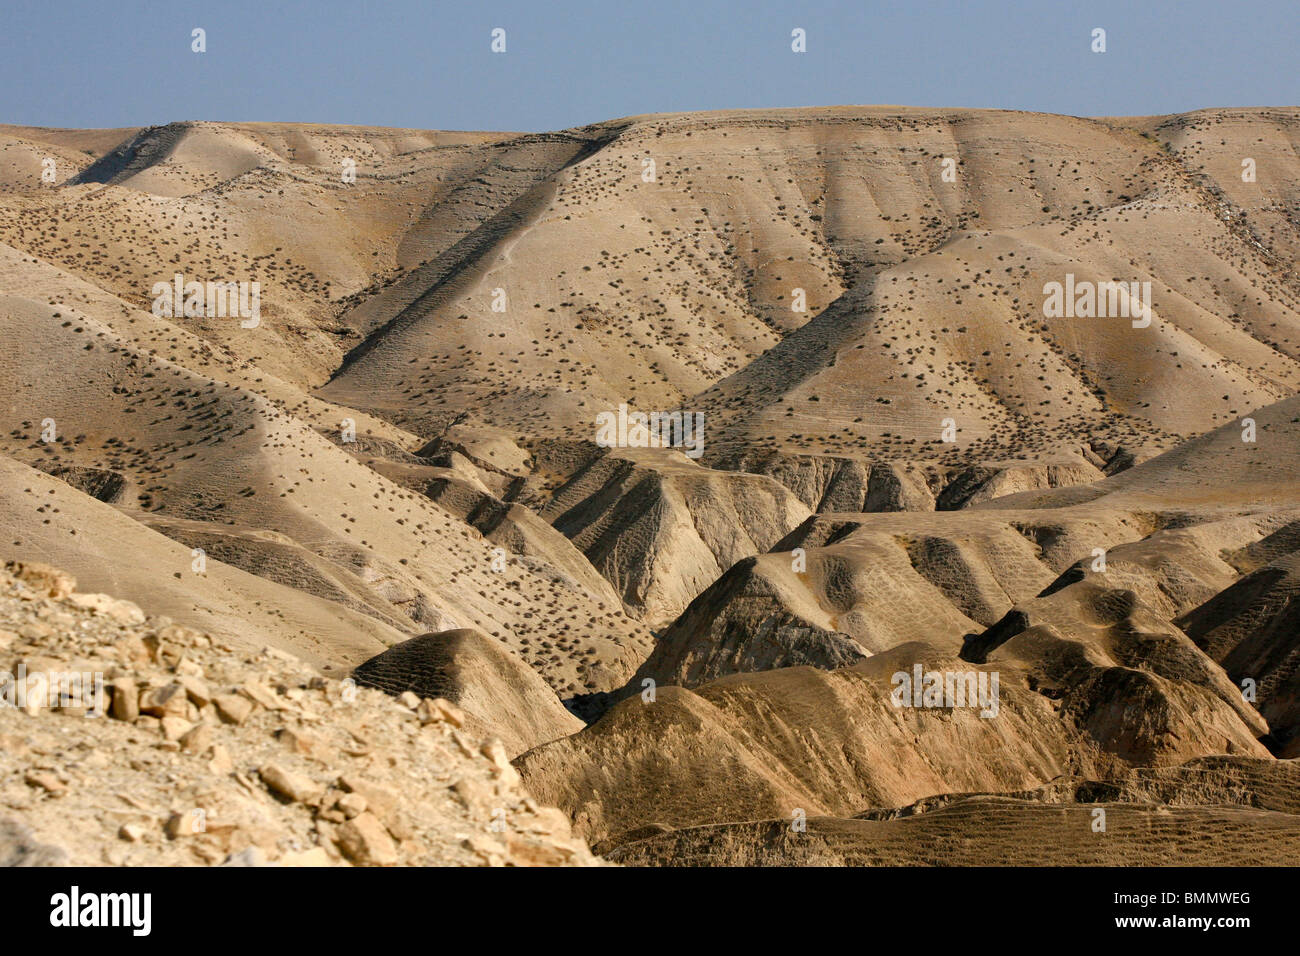 Israel, West Bank, Judaea Desert, The dunes of Judea desert. Stock Photo